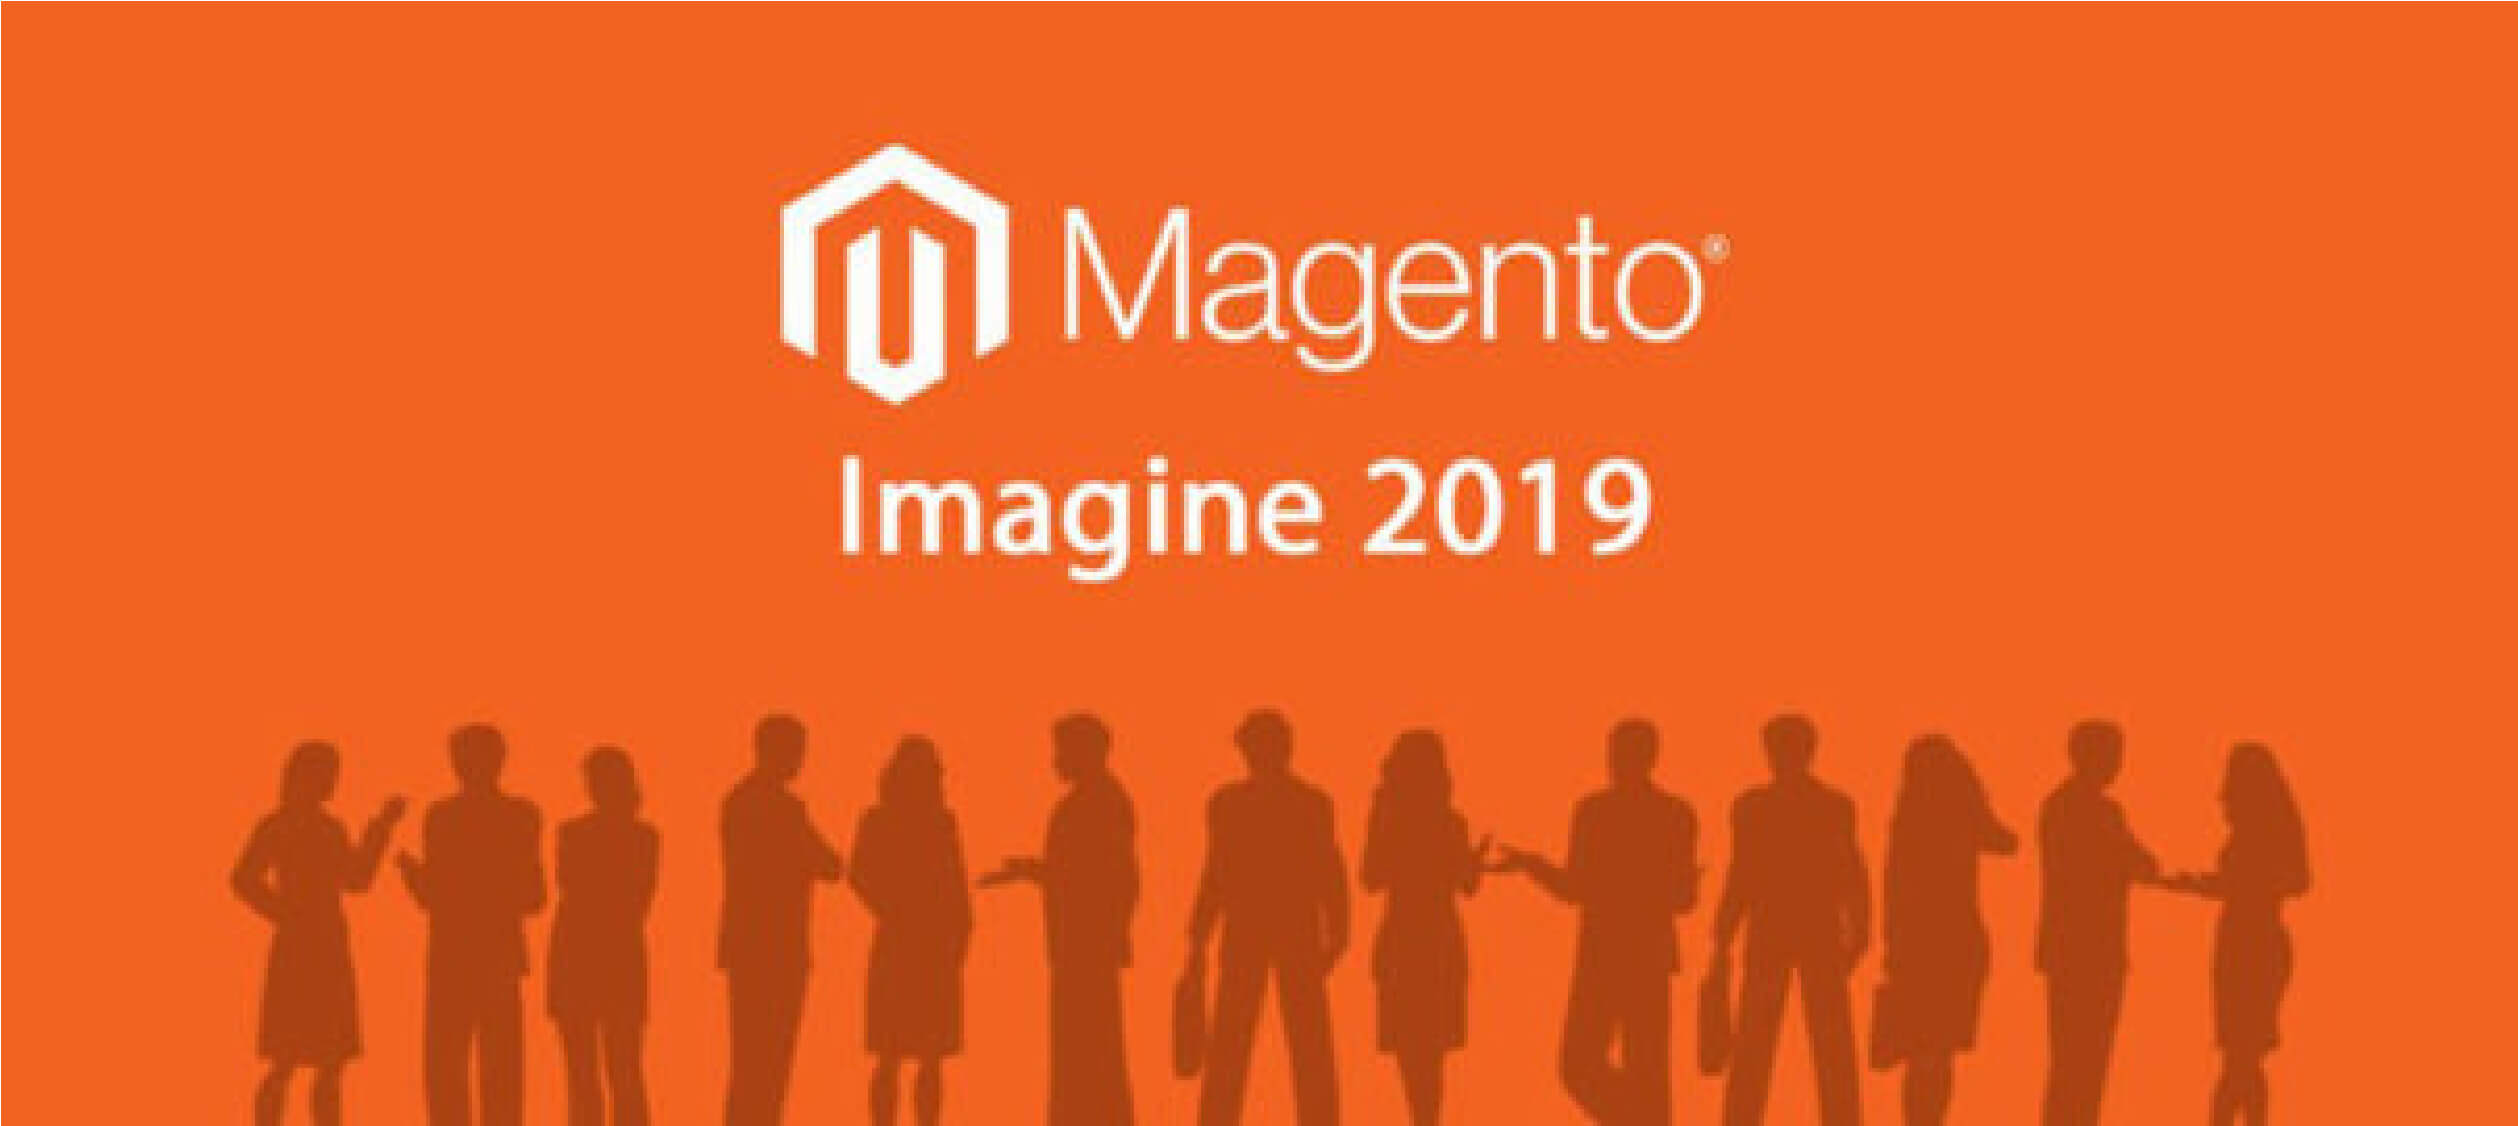 Meetaktiv-software-at-the-unique-magento-experience-imagine-2019